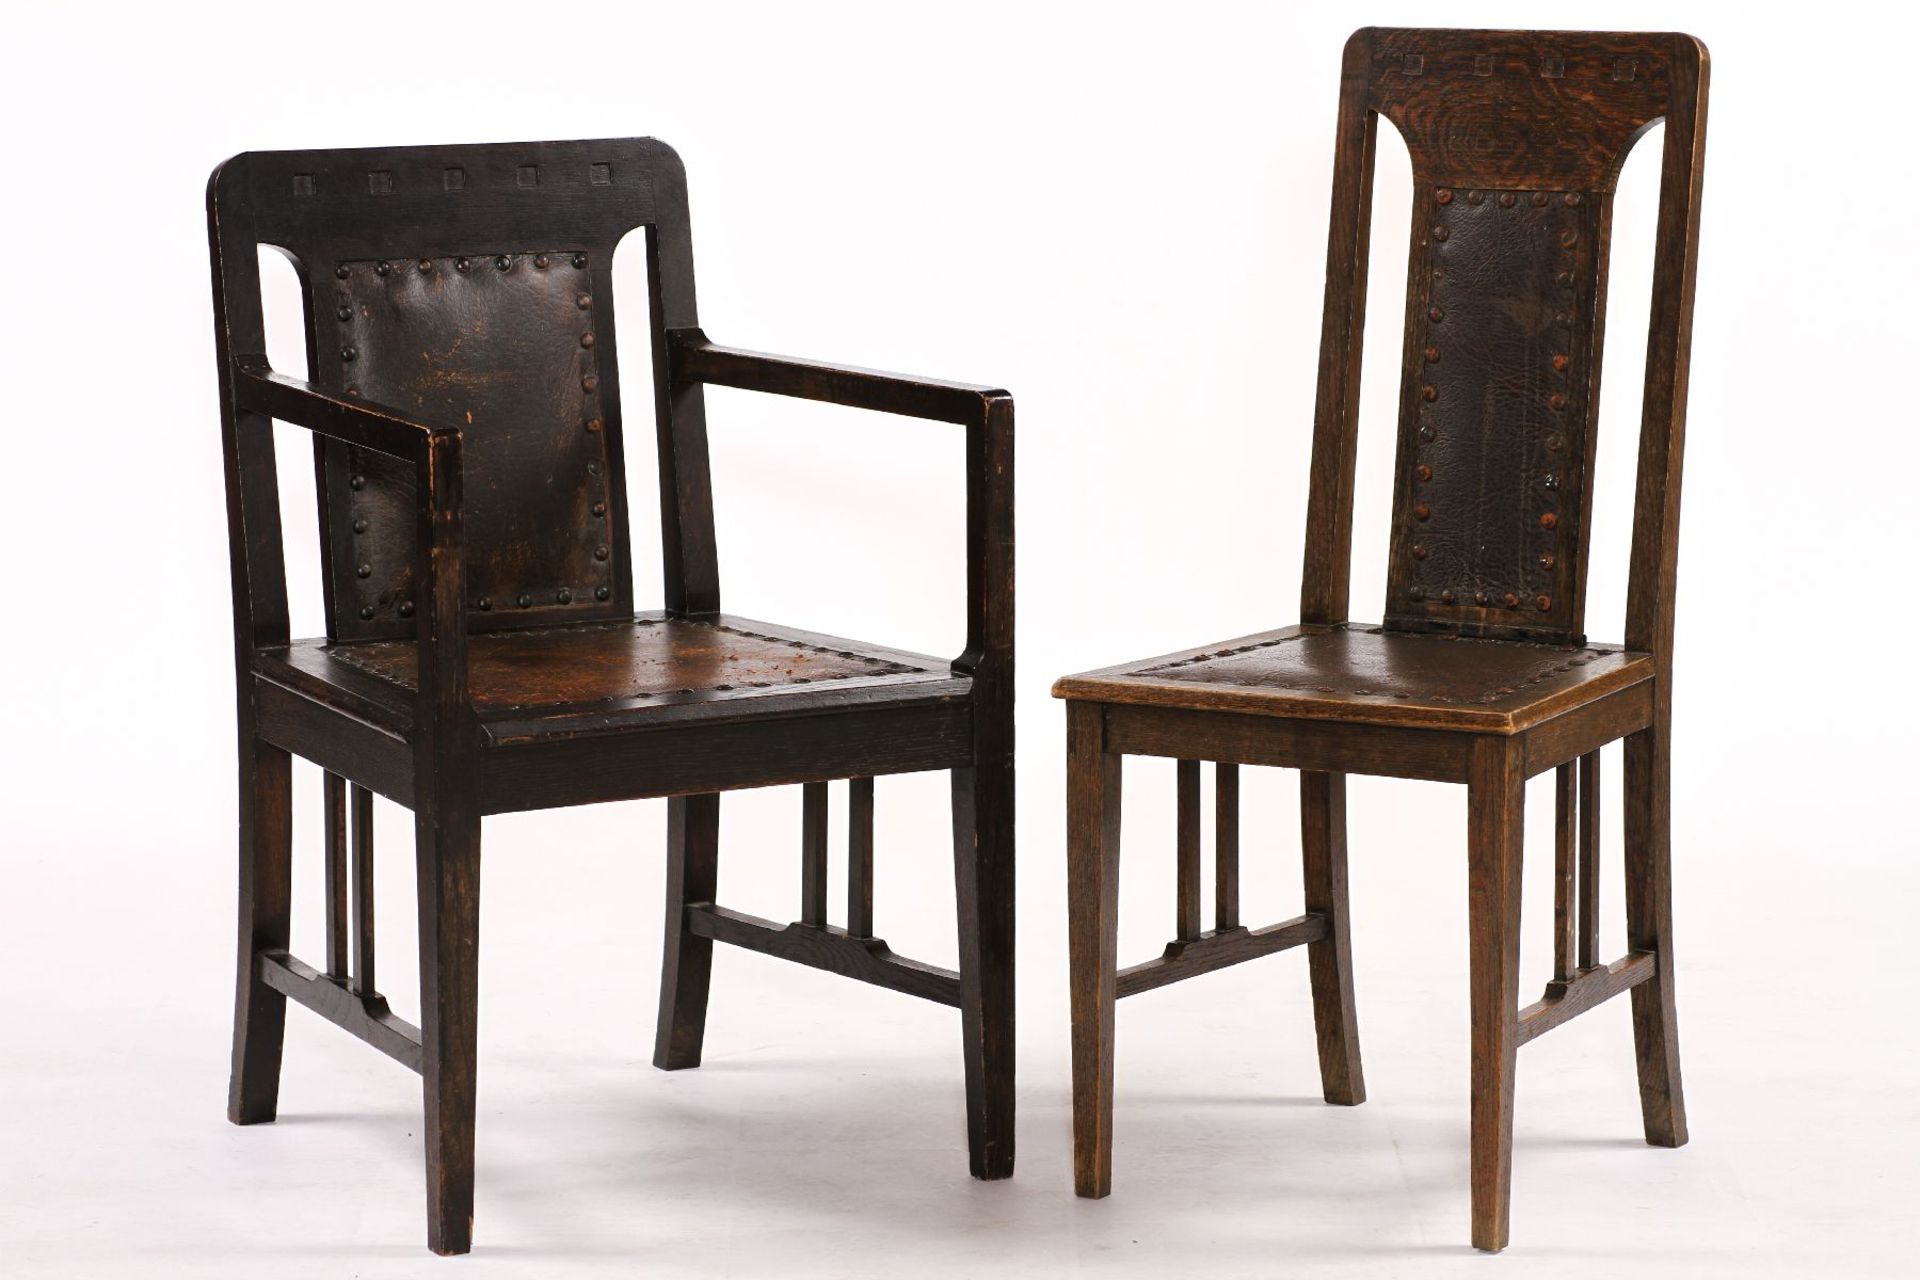 Chair, German, around 1905, pure abstract Art Nouveau, under the great influence of Riemerschmid (